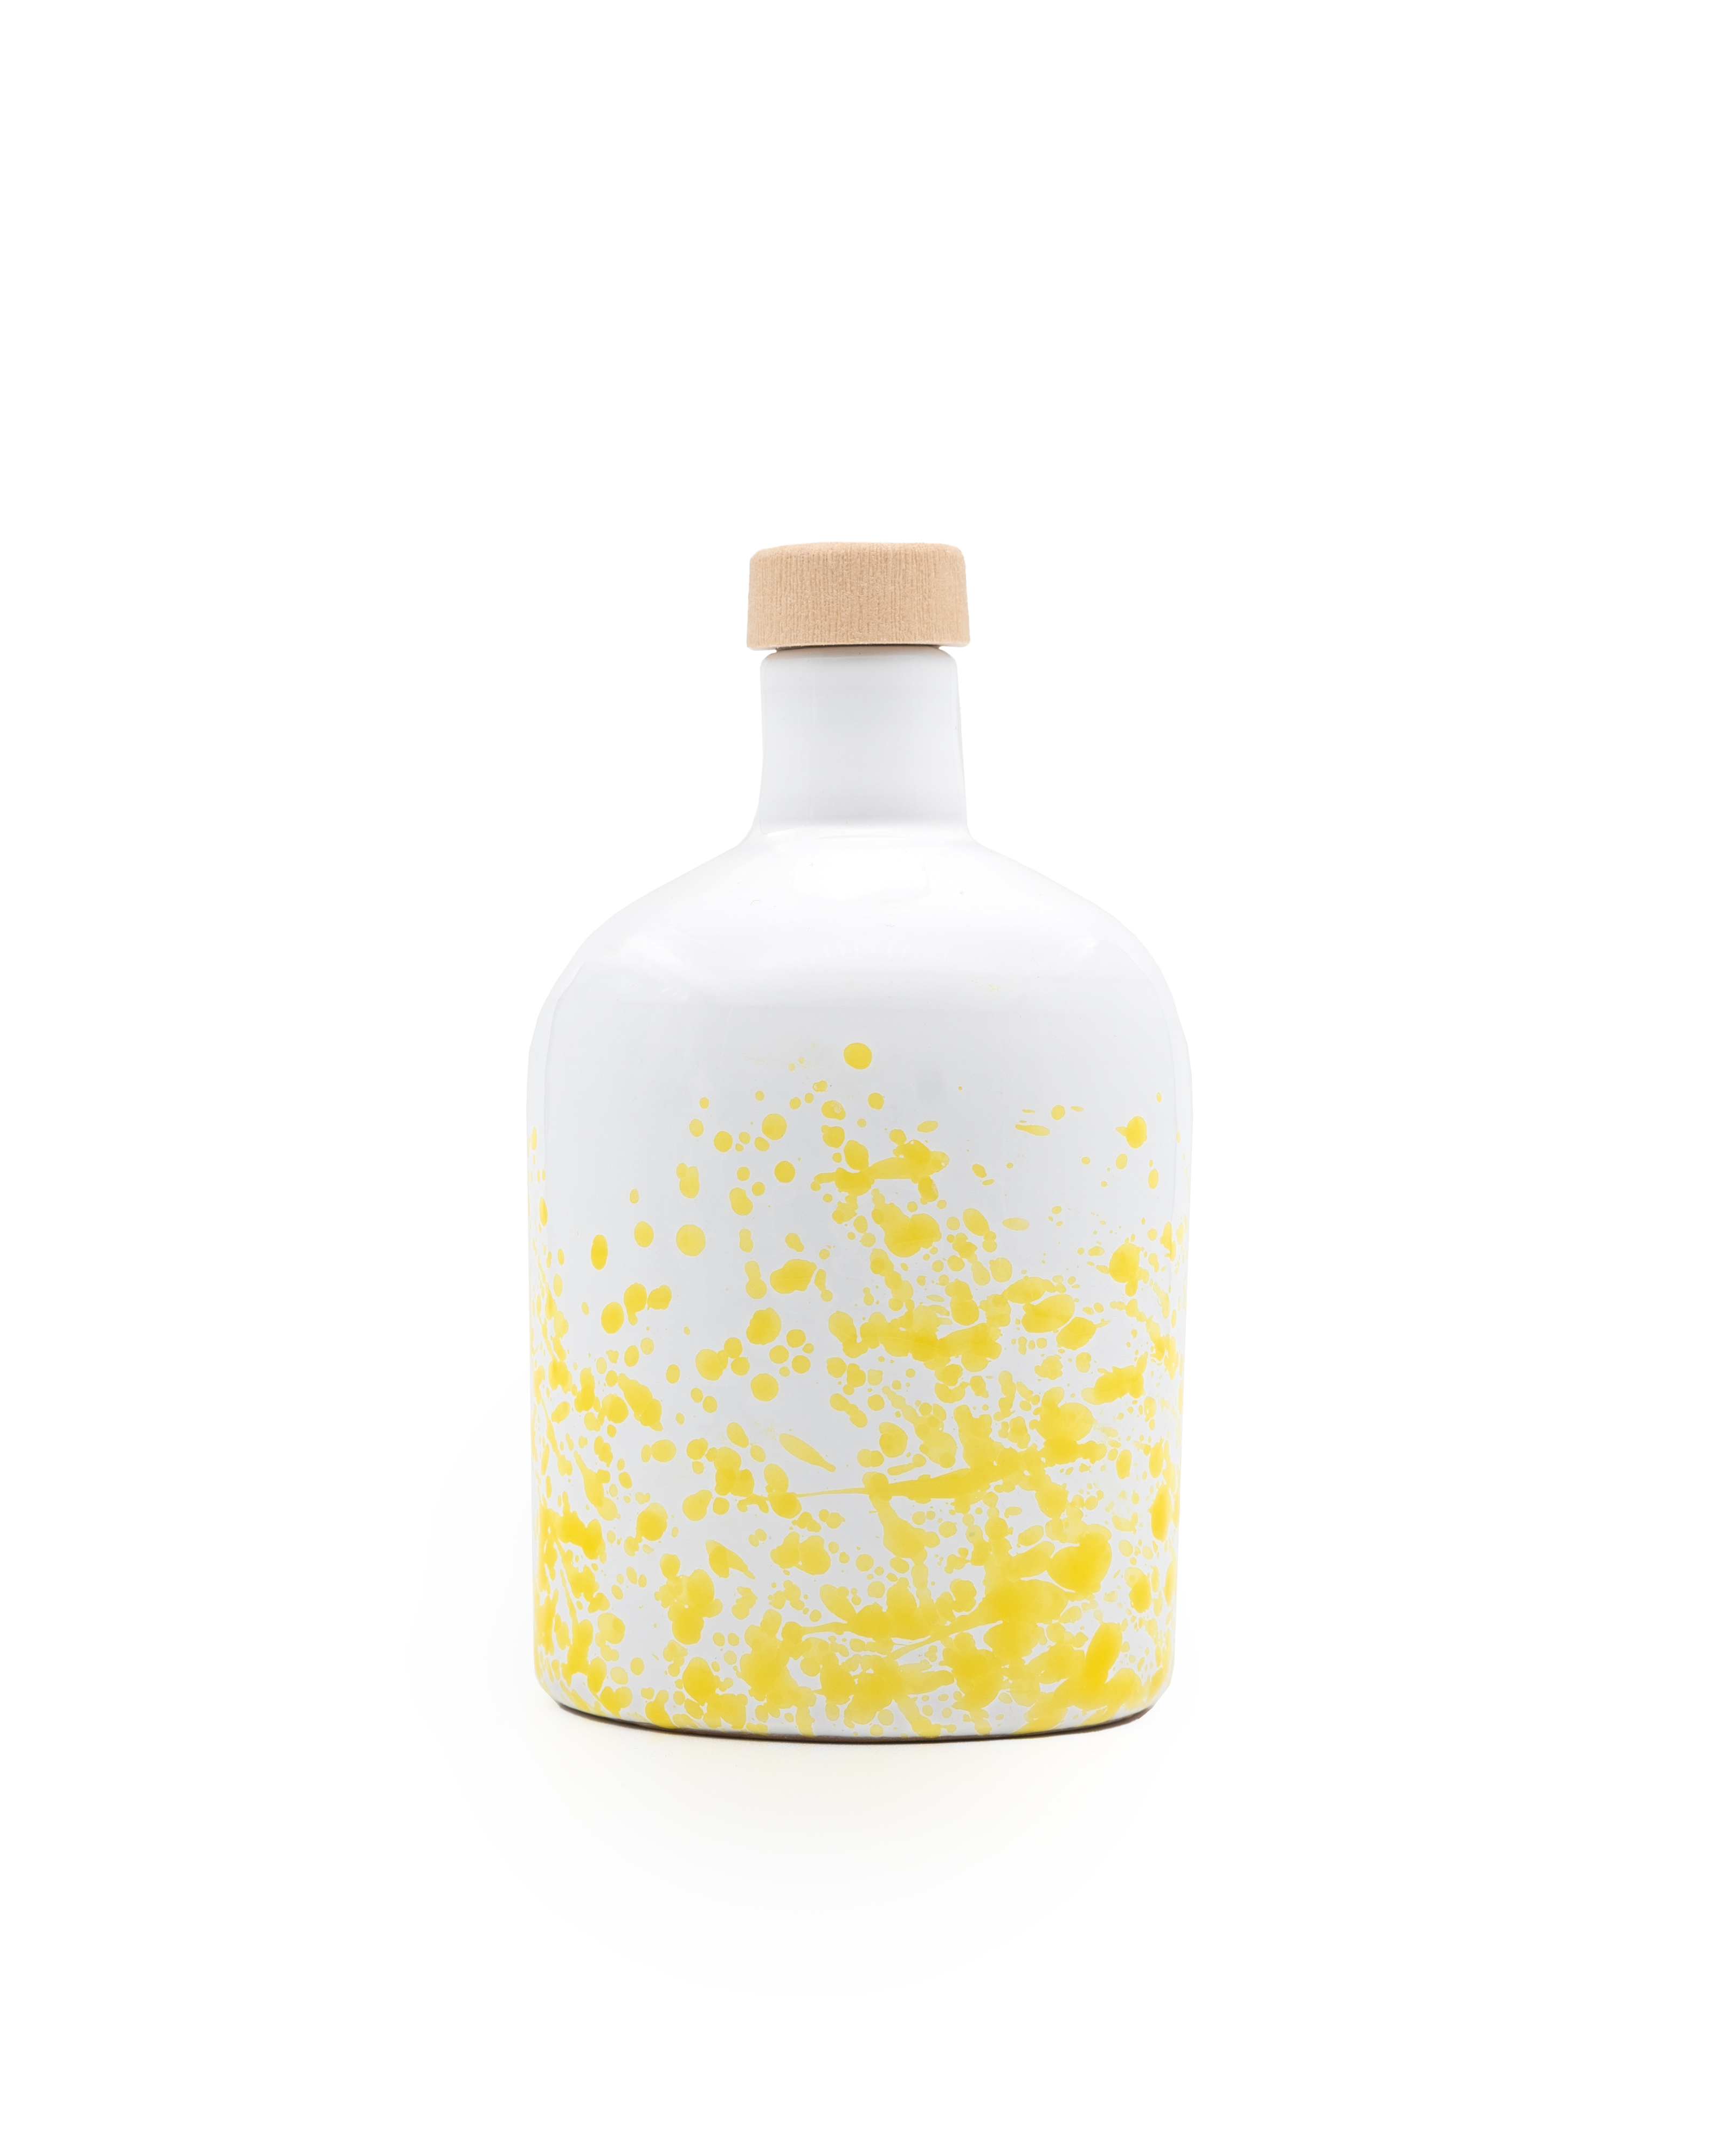 ANDANTE organic extra virgin olive oil, filtered, 500ml yellow ceramic bottle.